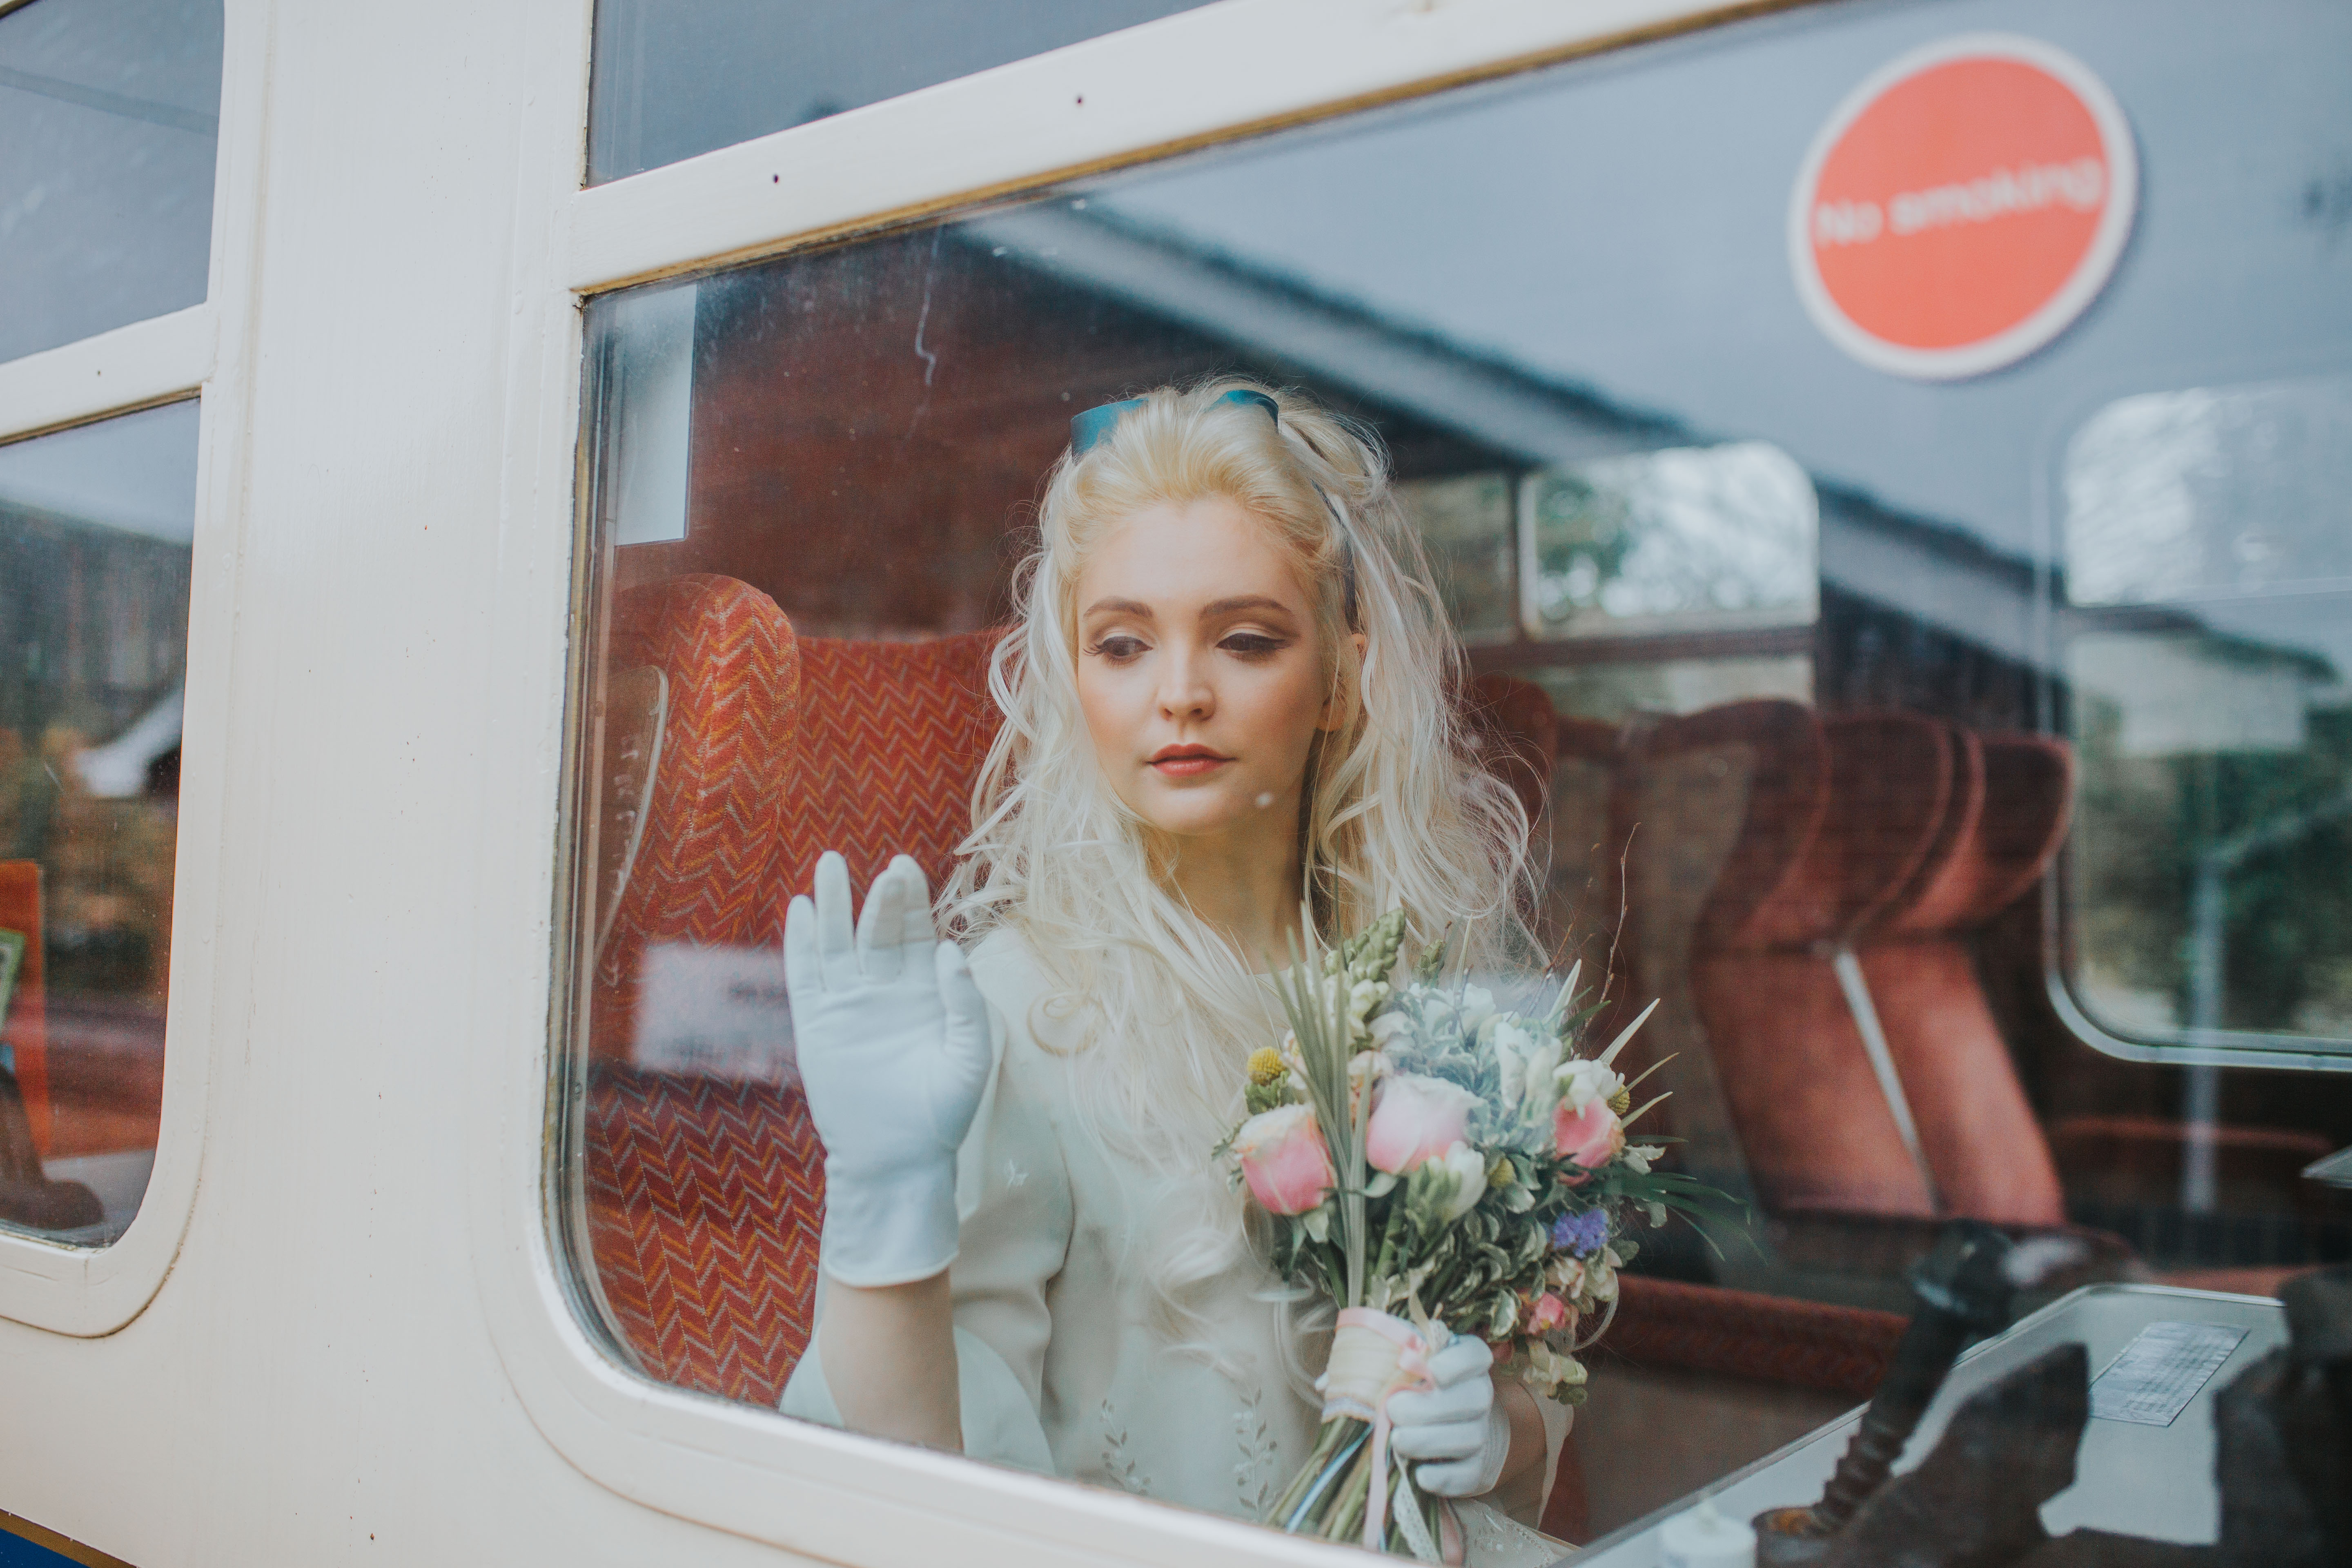 1960's Bridal Inspiration - A Charming Vintage Railway Shoot